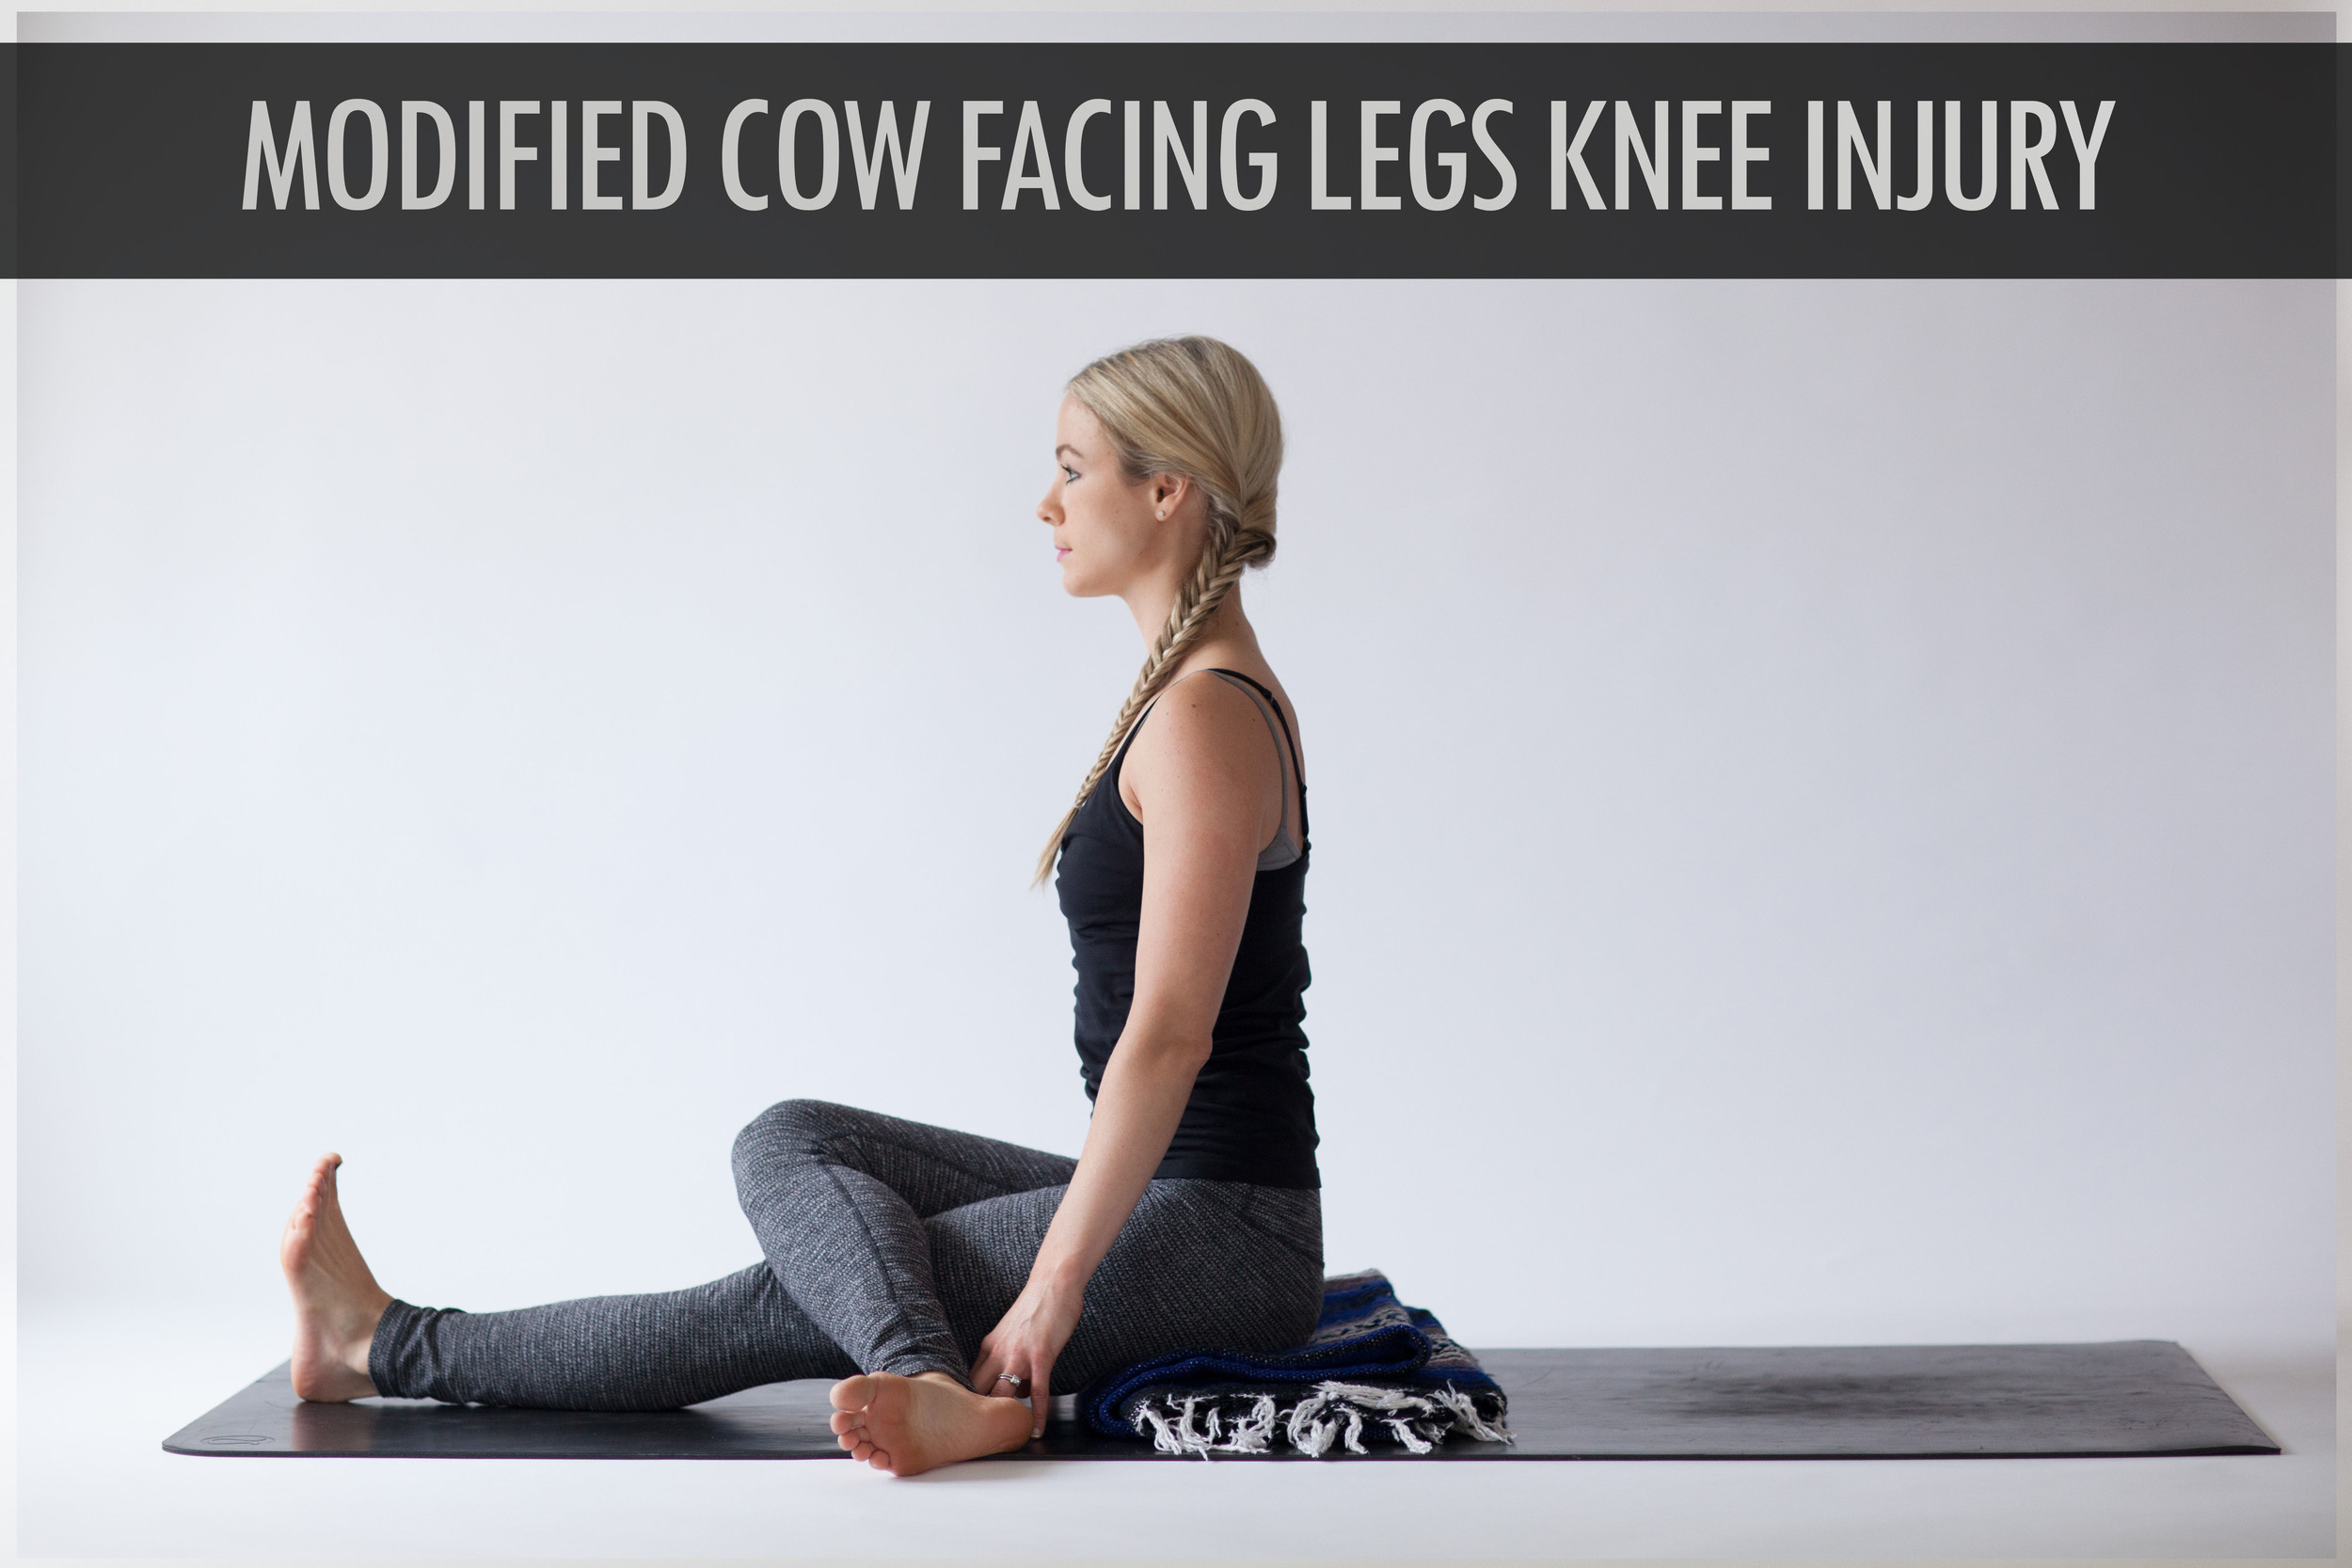 Modified Cow Facing Legs Knee Injury.jpg